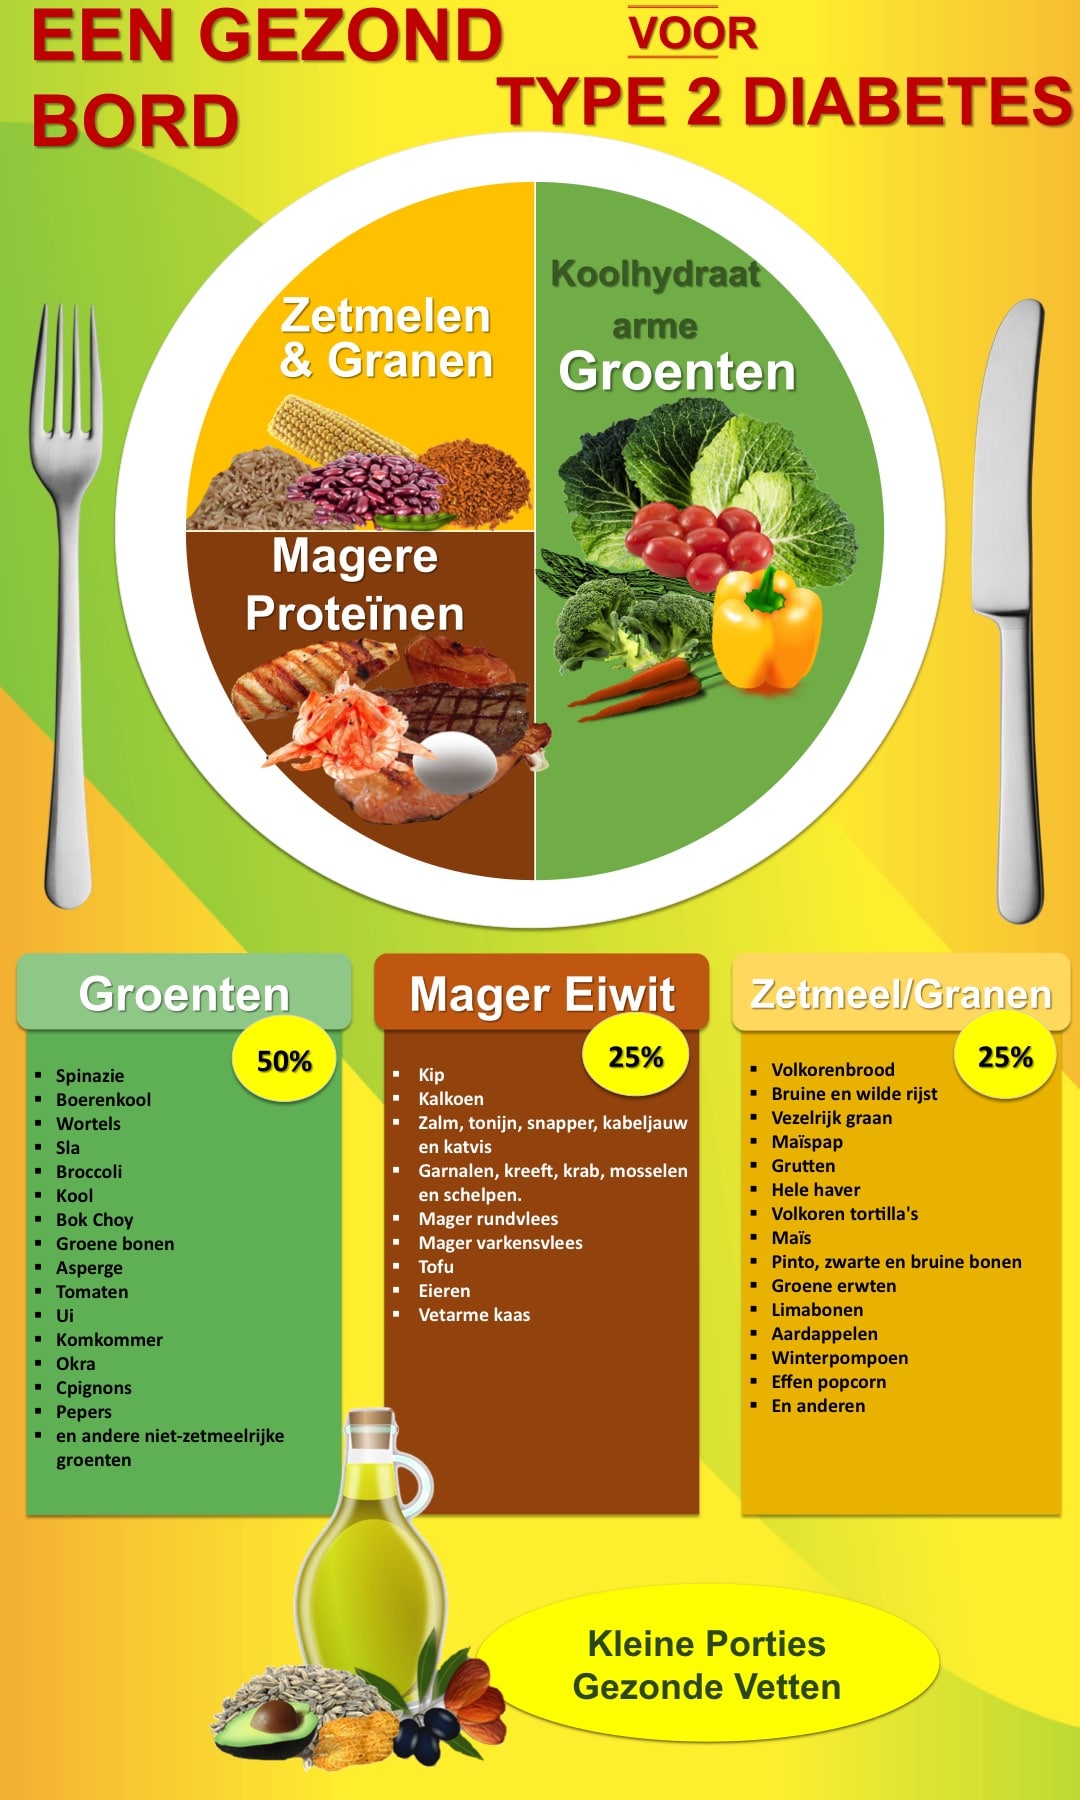 Suikerziekte-gezond-bord-infographic